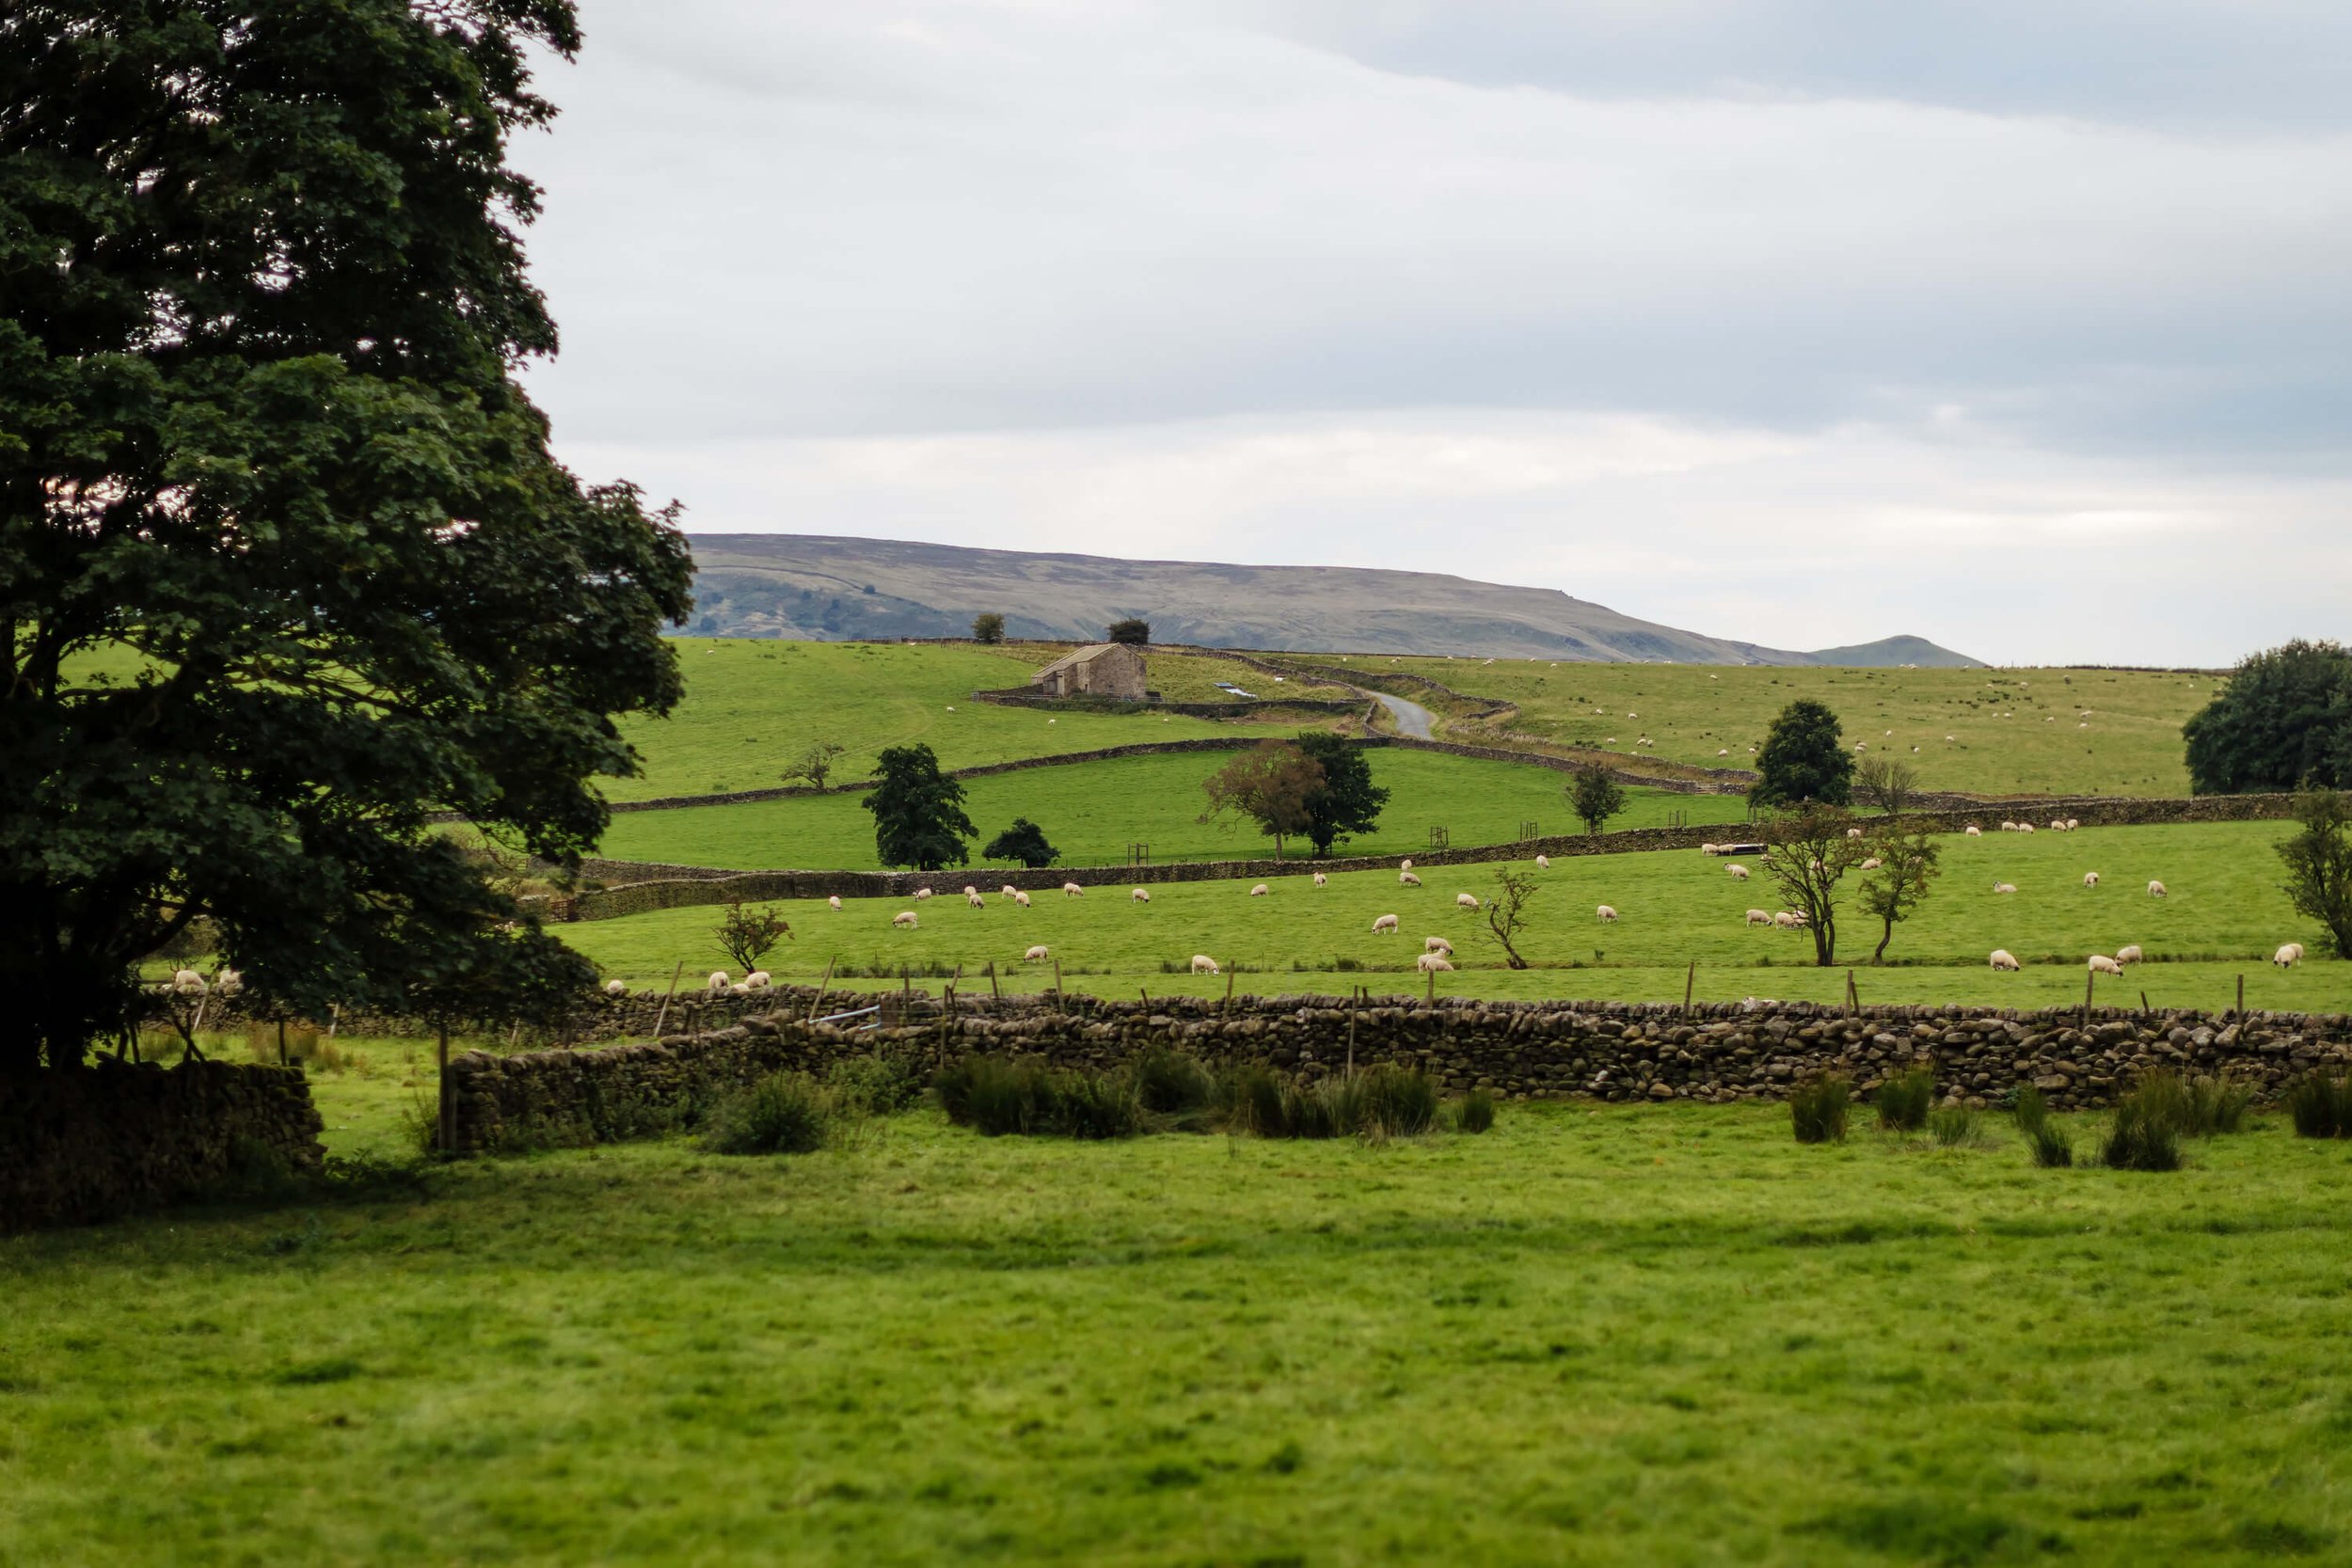 A landscape shot of The Yorkshire Dales